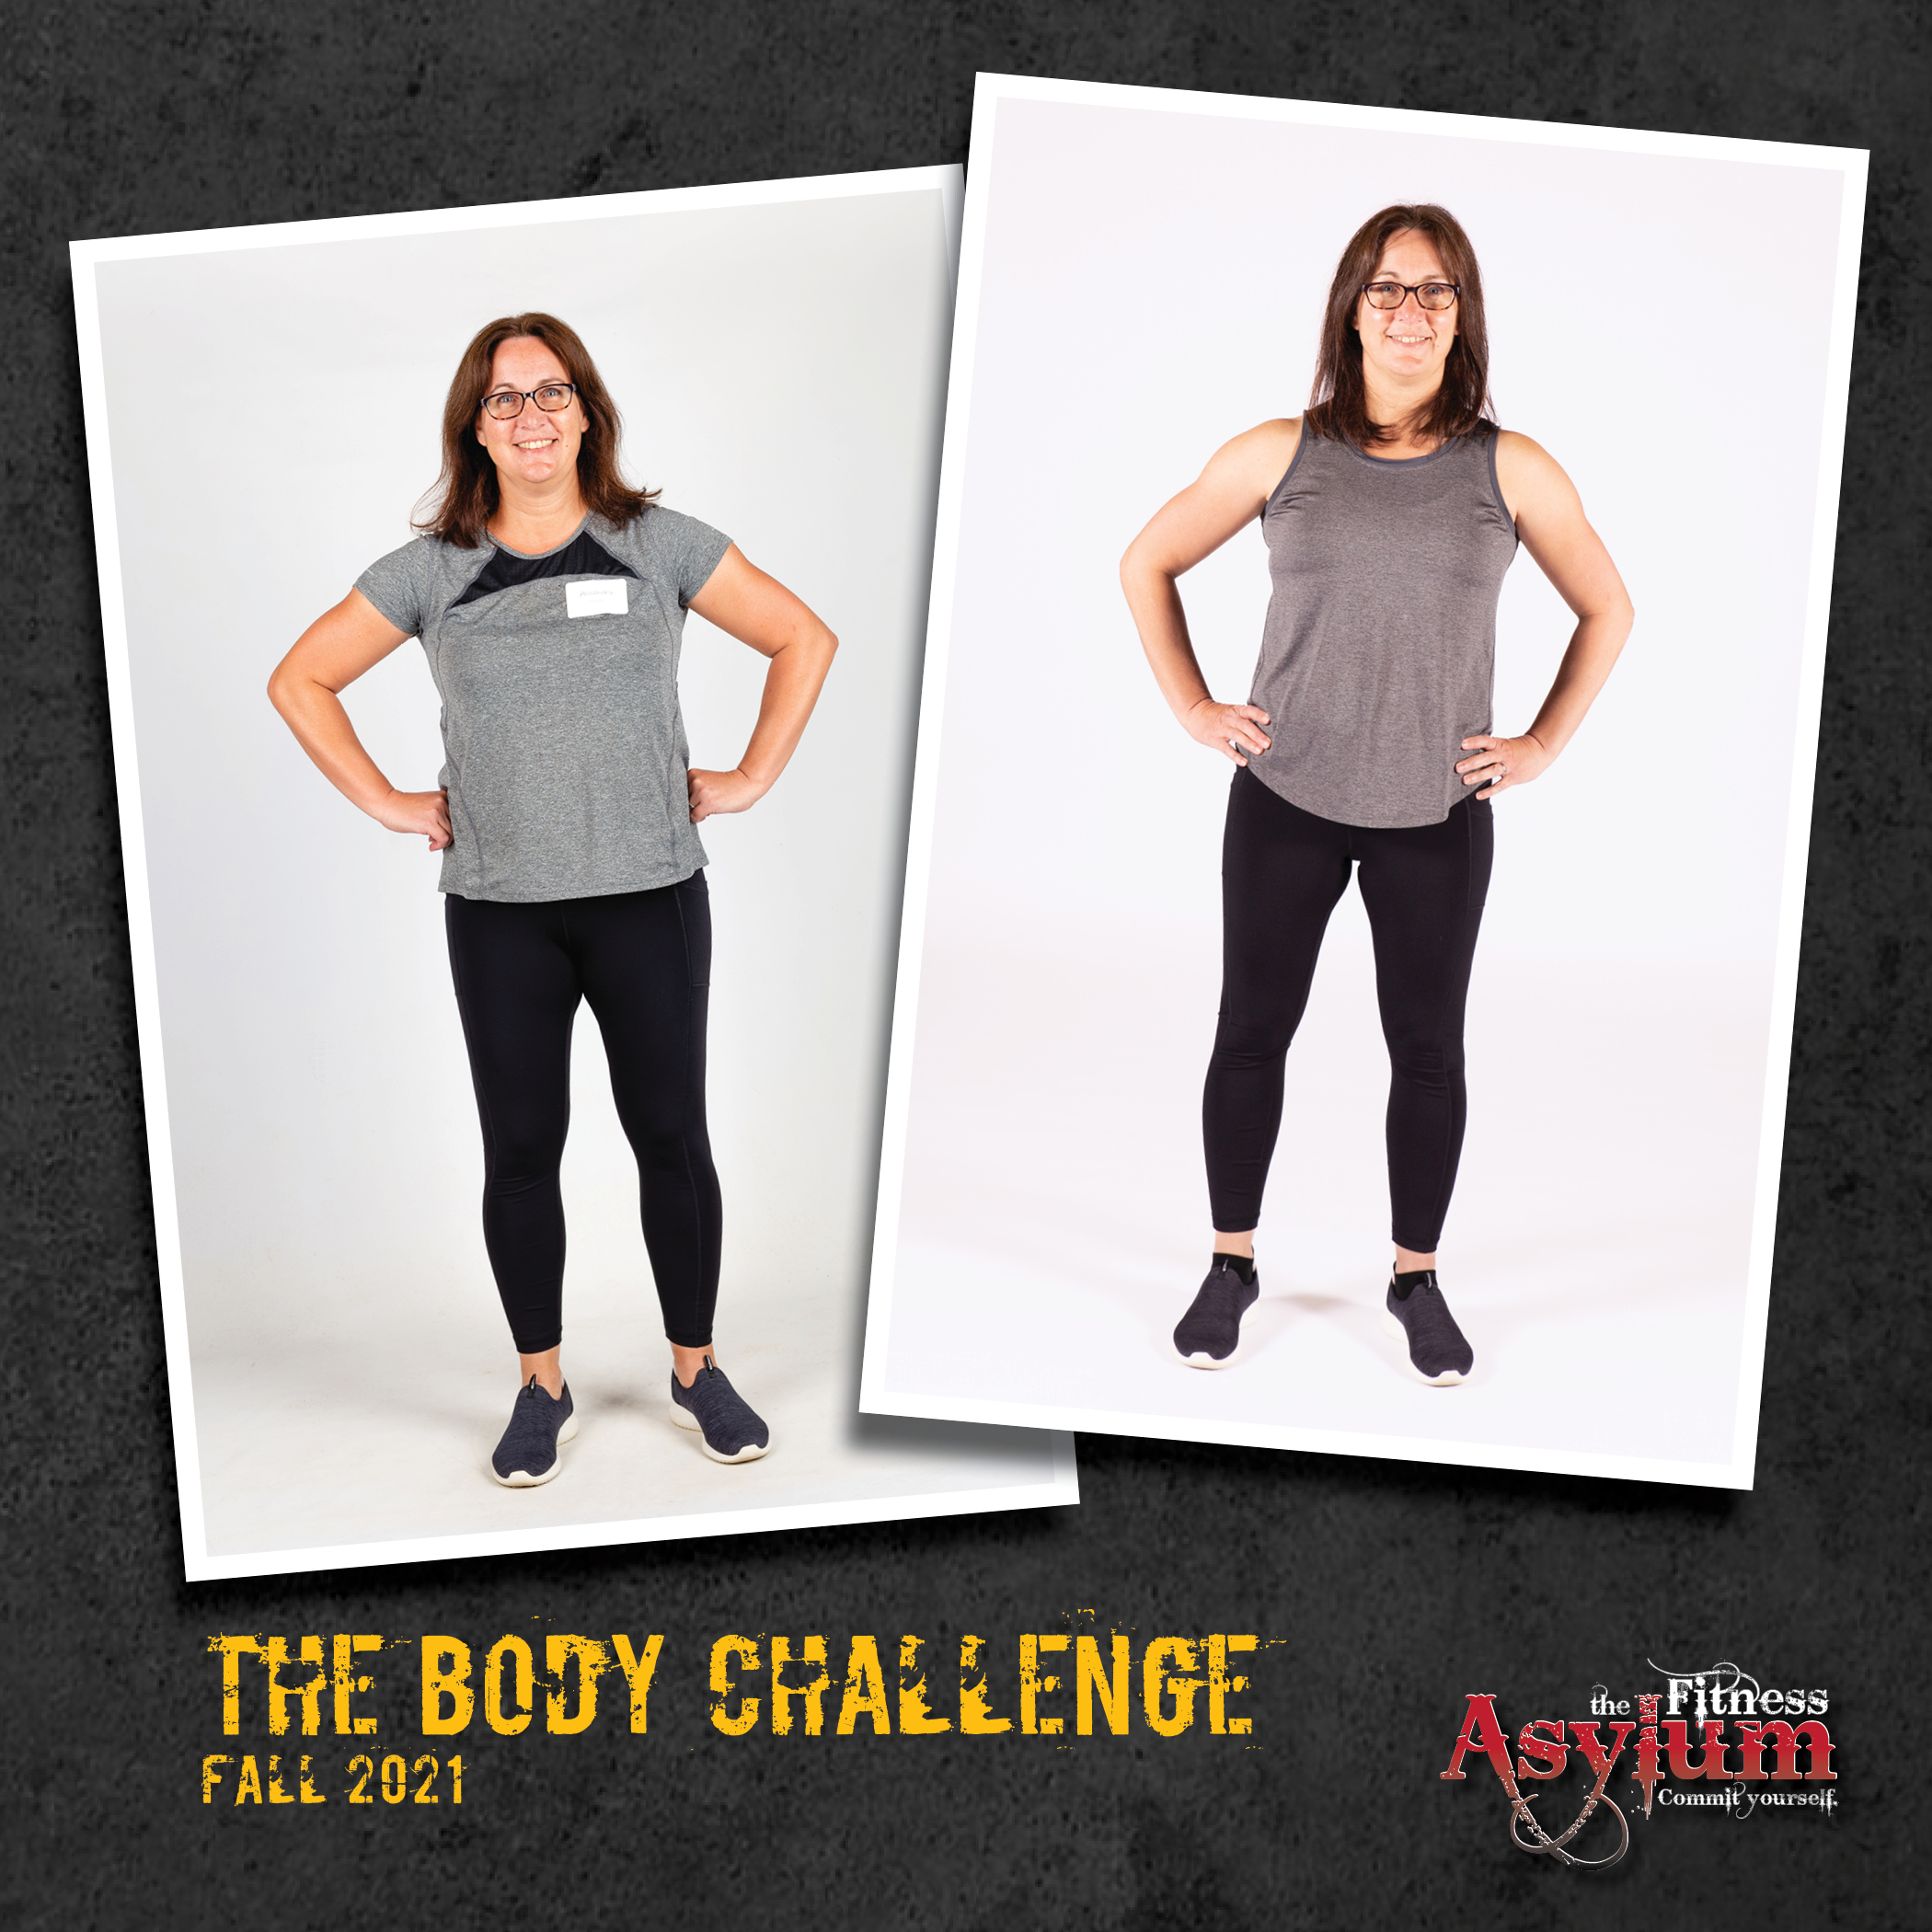 Go Beyond Fitness - Our 8 Week Bikini Body Challenge has been